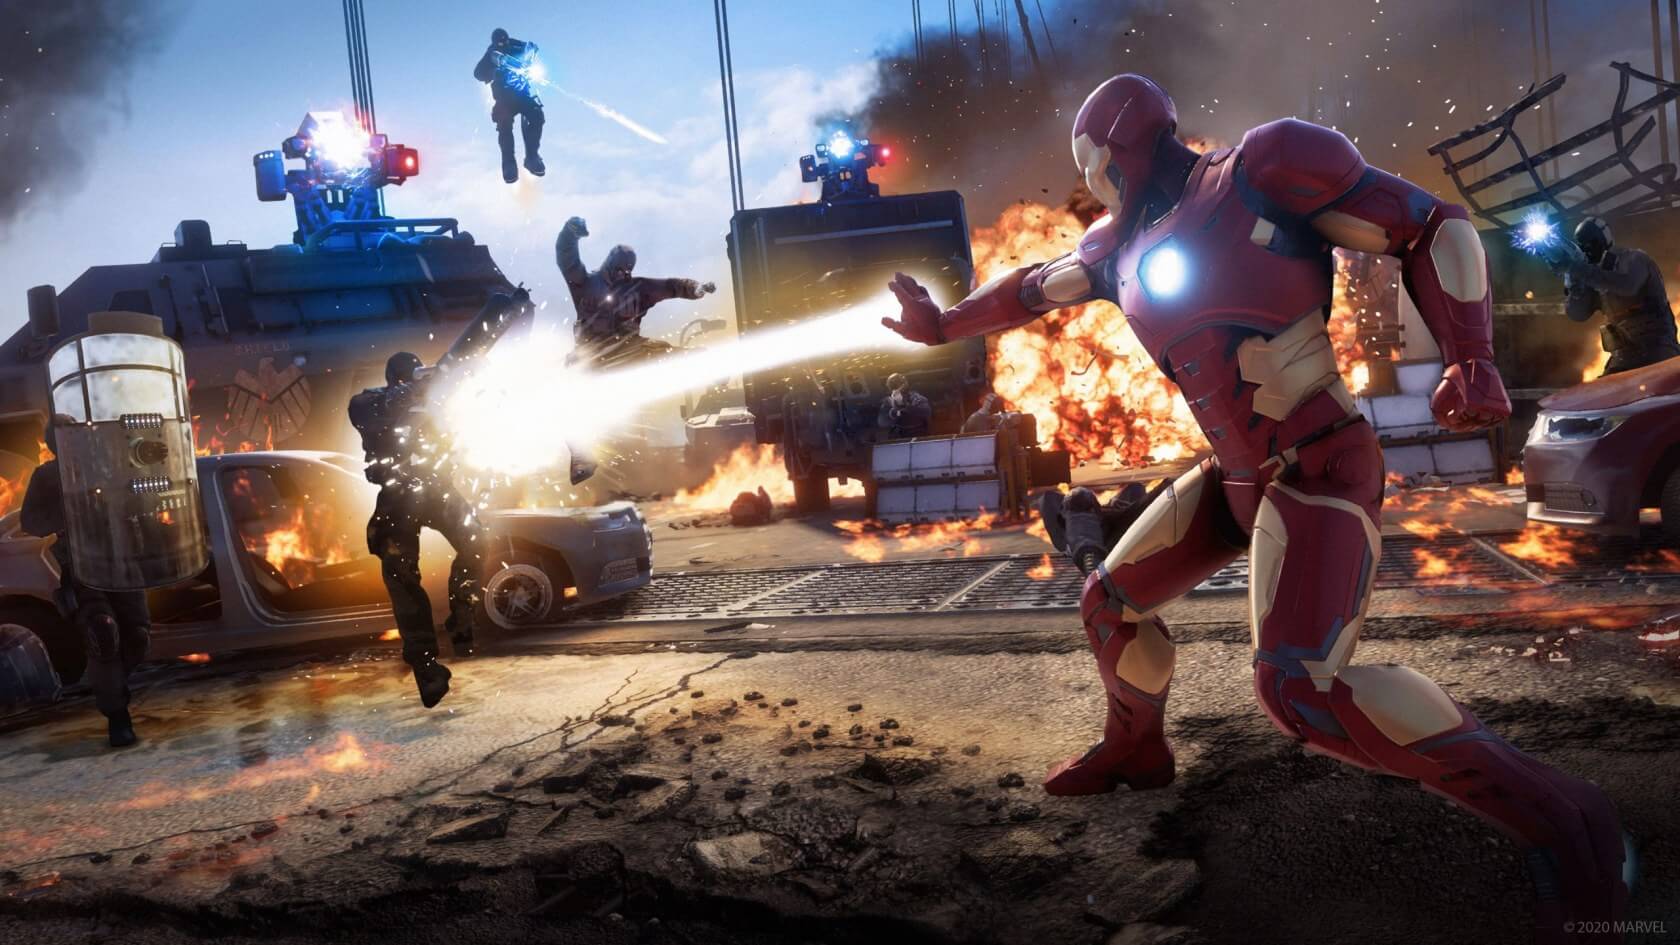 Marvel's Avengers' open beta kicks off tomorrow